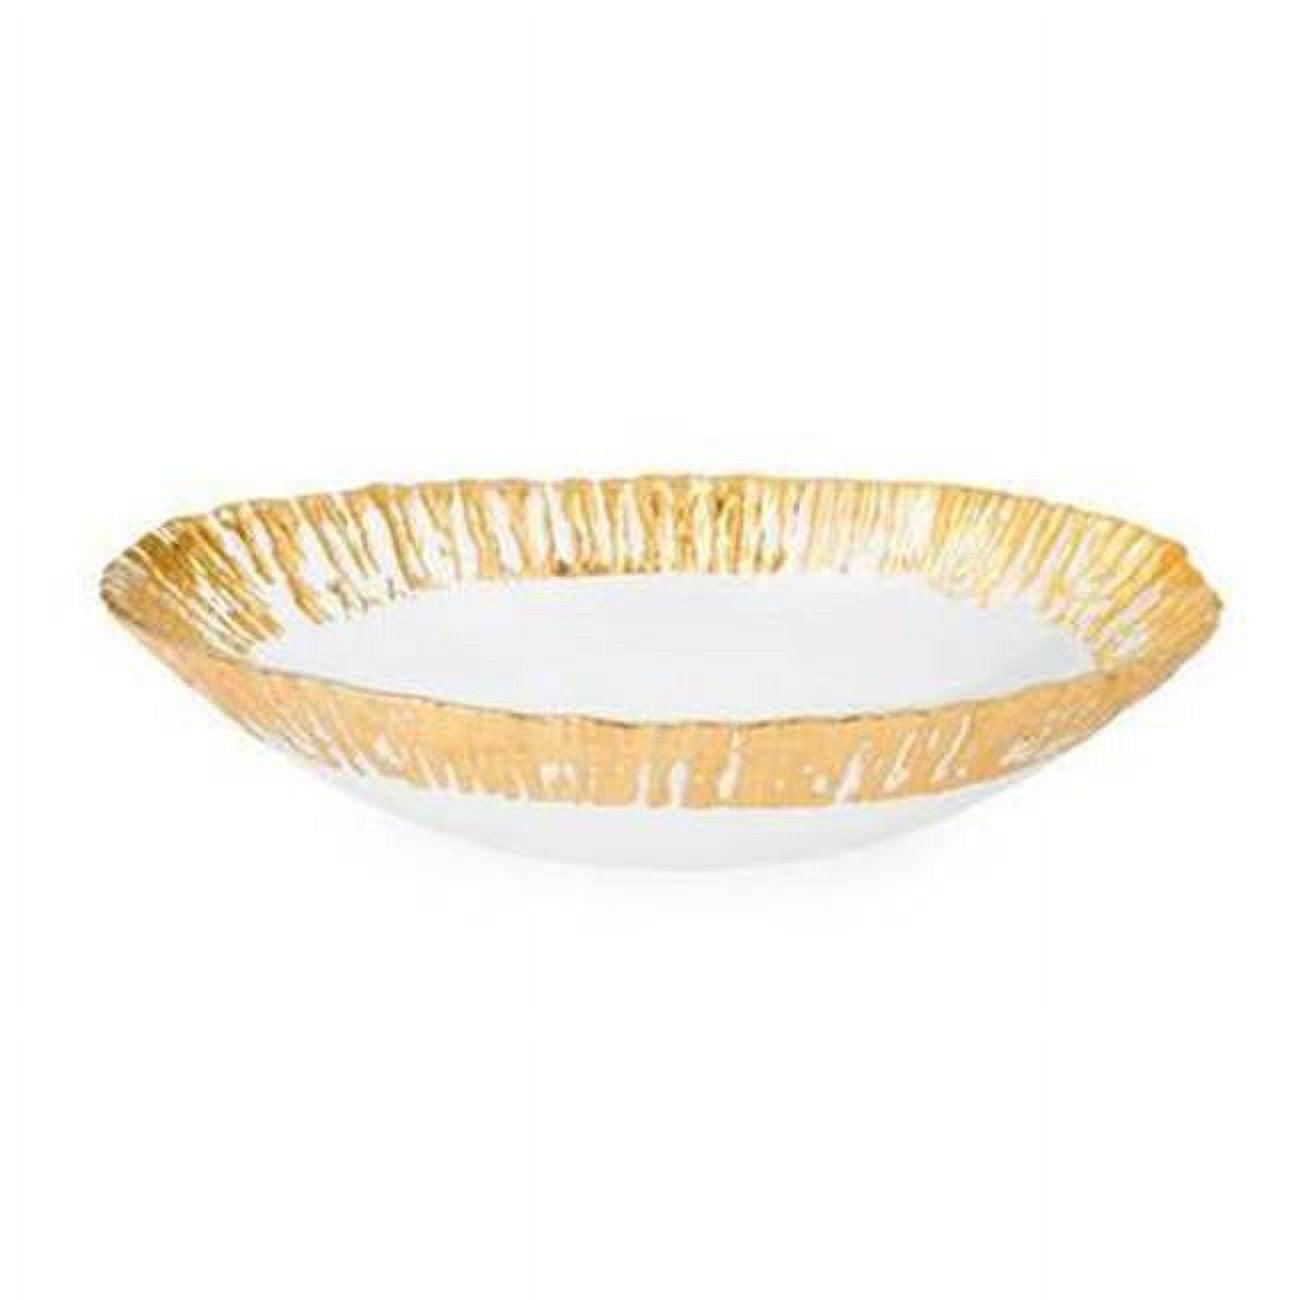 Elegant Scalloped Glass Bowl with 14K Gold Artwork, 11"